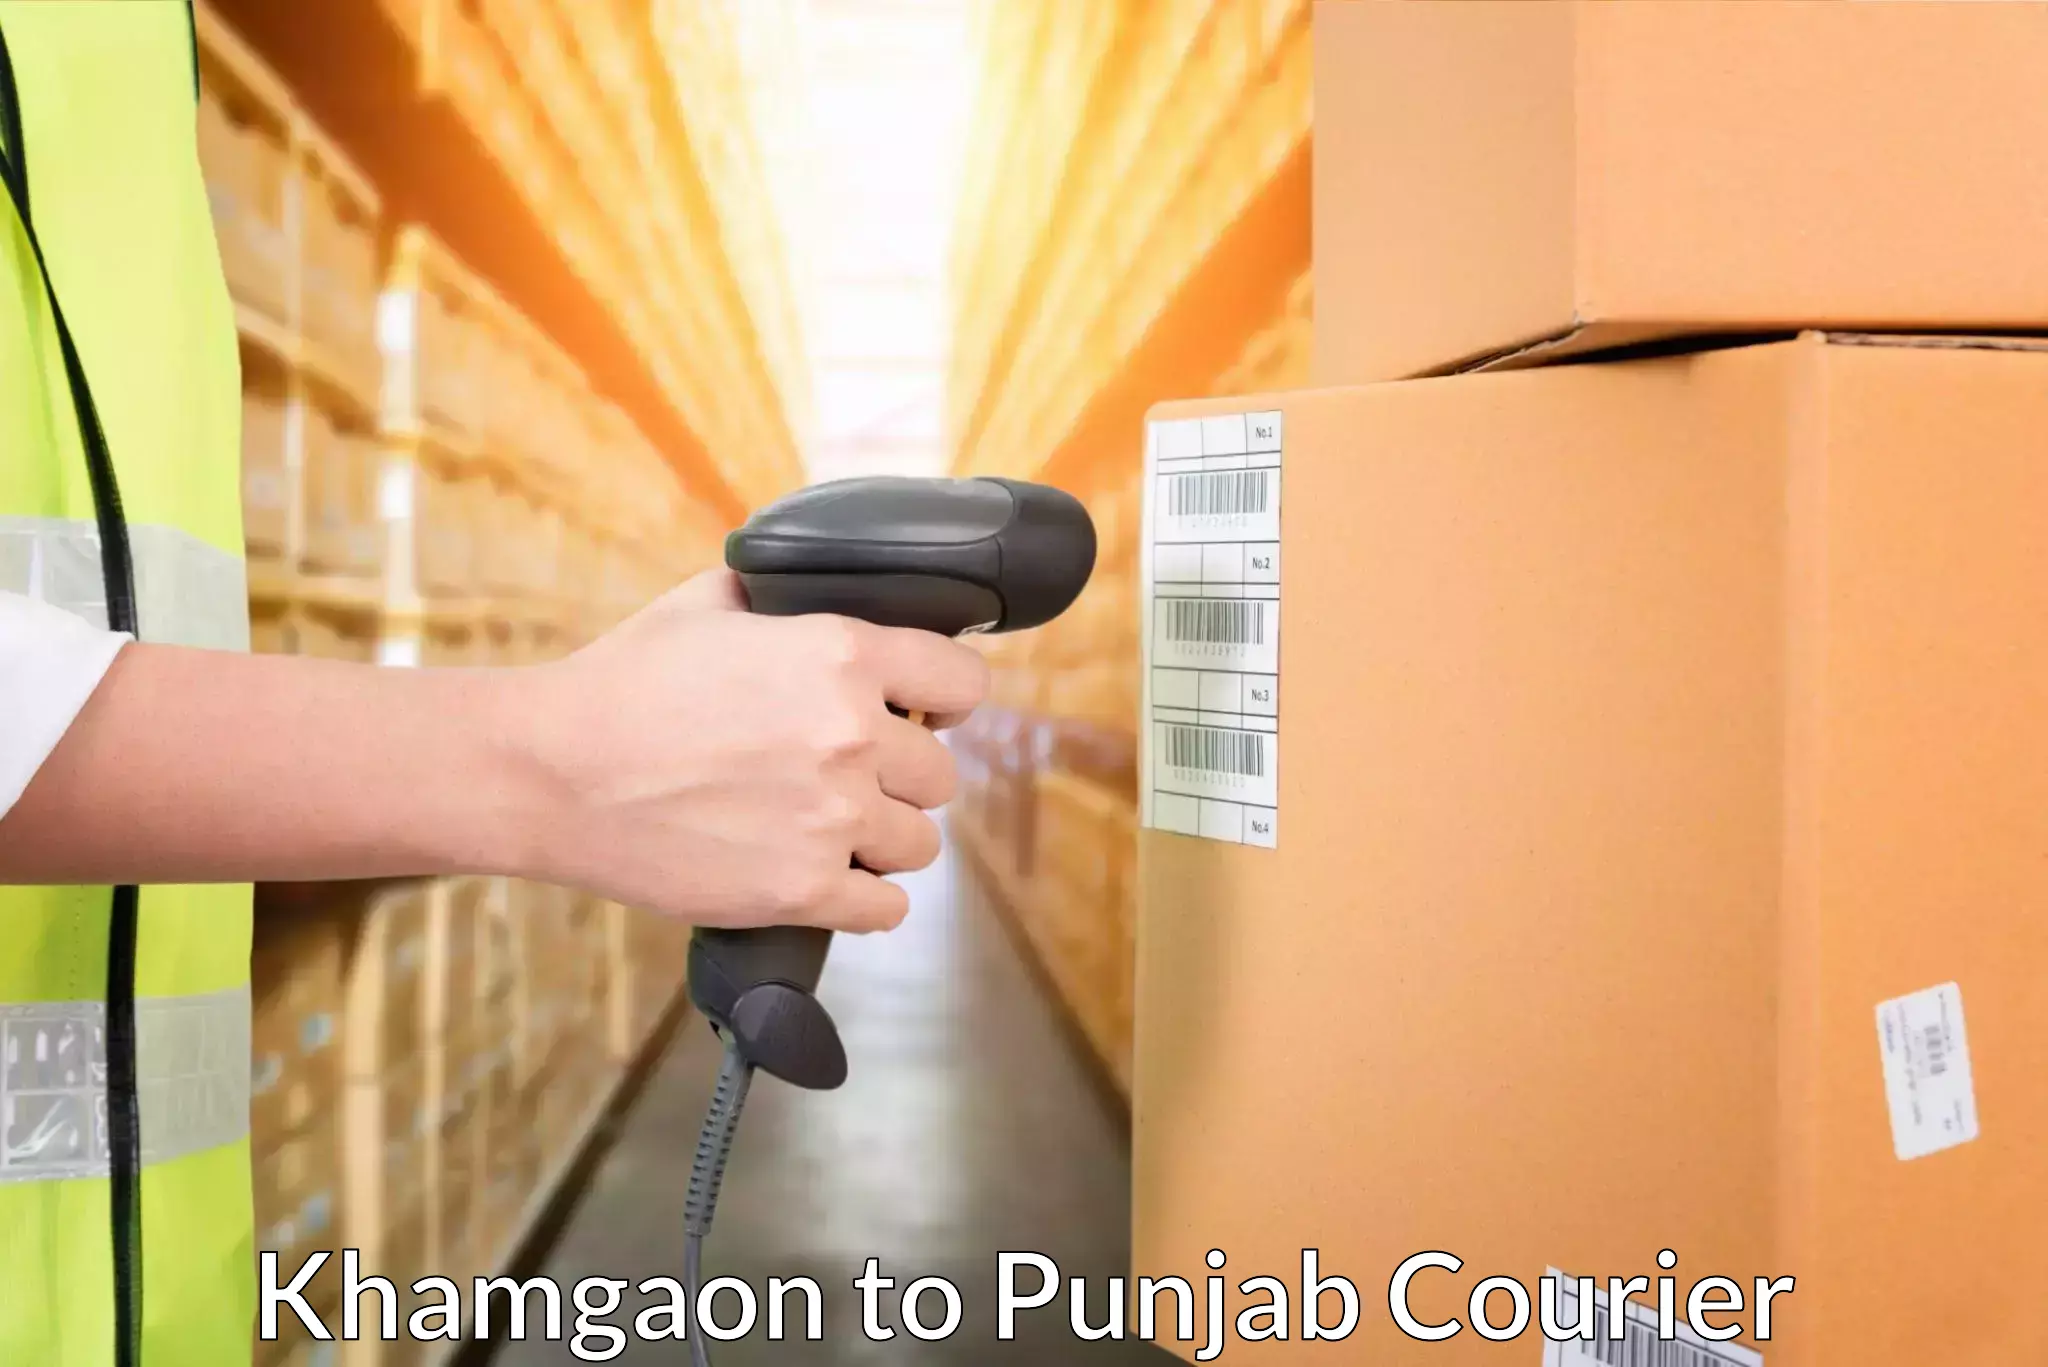 24/7 courier service Khamgaon to Mohali